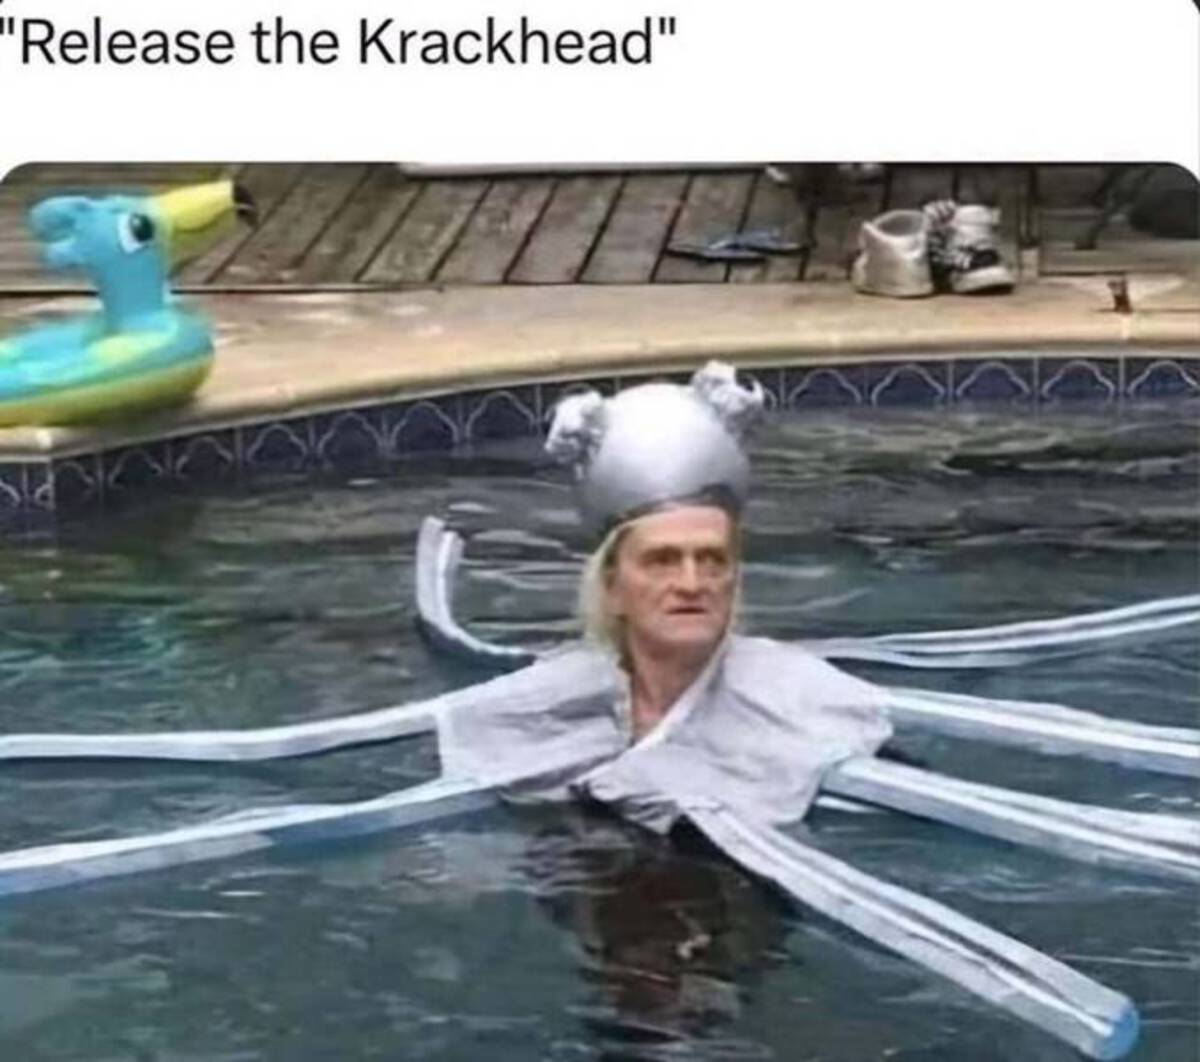 leisure - "Release the Krackhead"